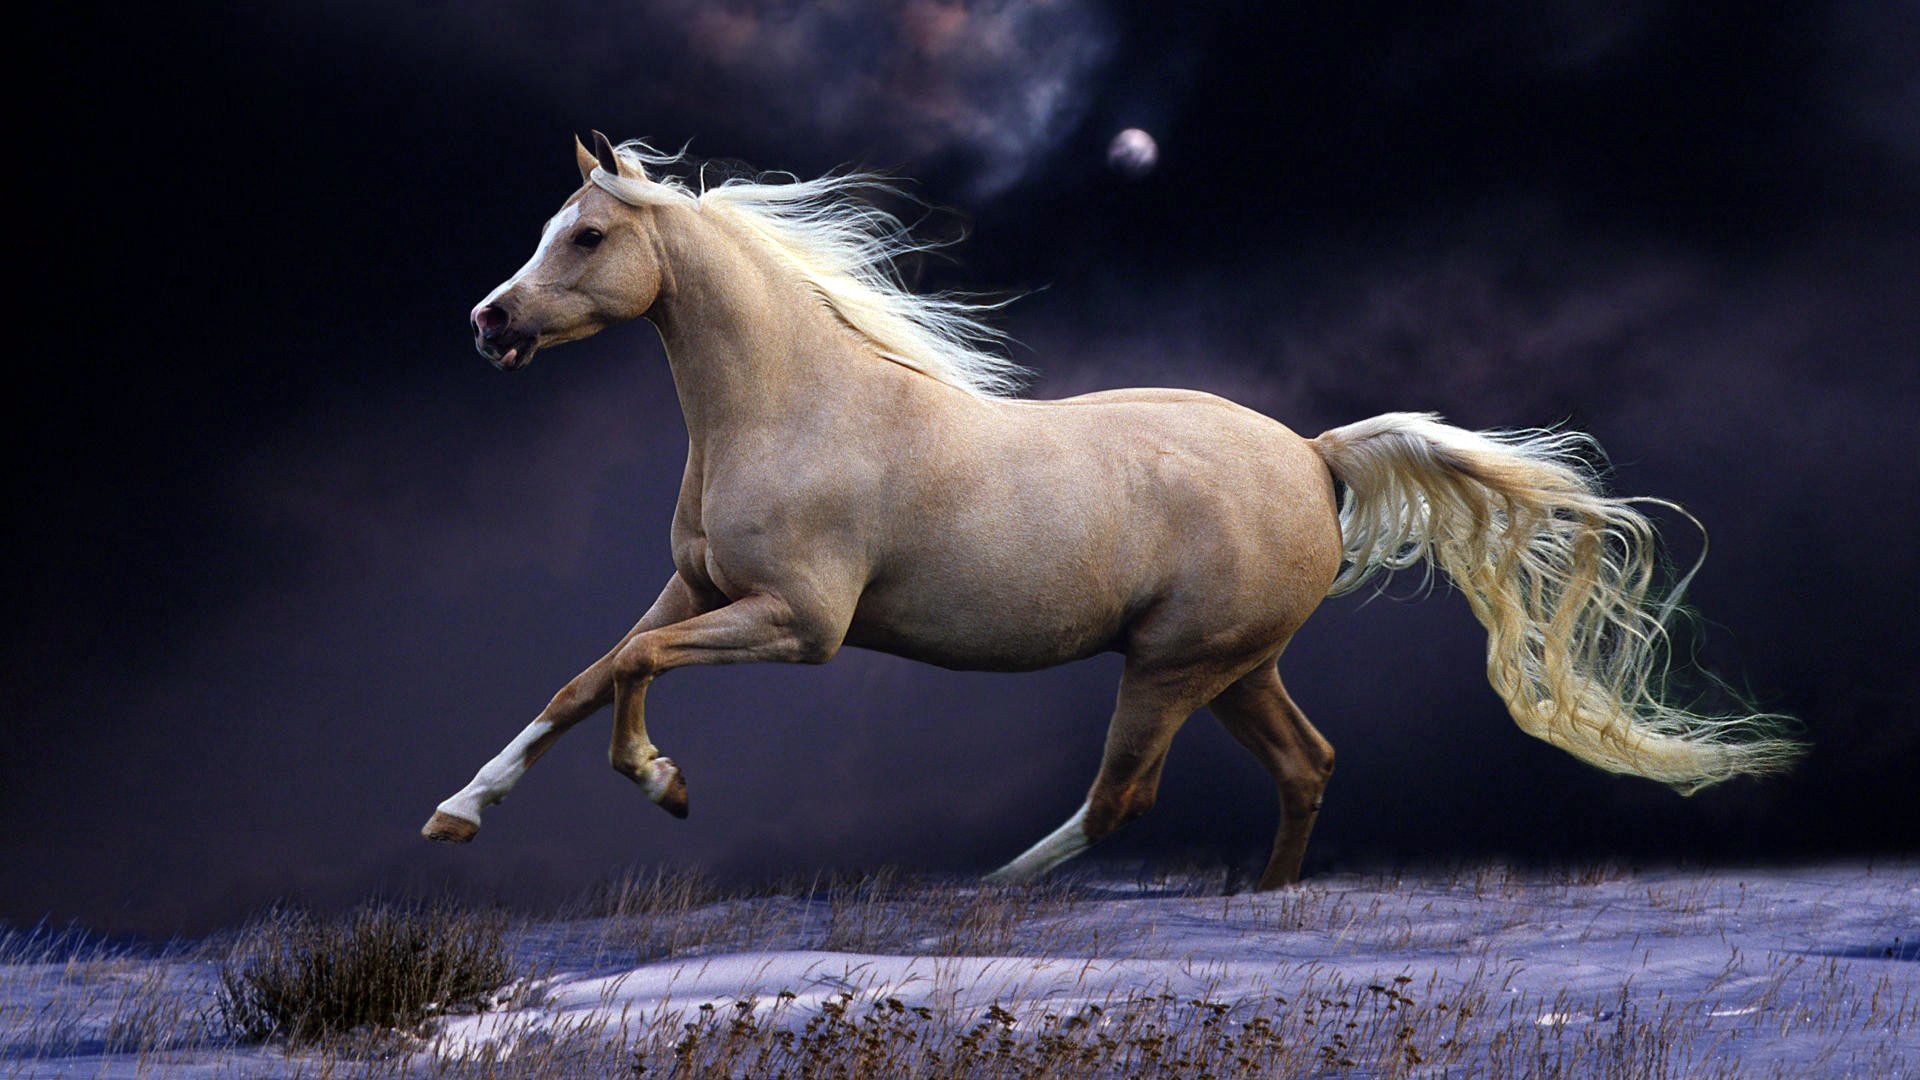 81322 descargar imagen animales, melena, caballo, cielo, noche, hermosa, hermoso, corriente, correr: fondos de pantalla y protectores de pantalla gratis